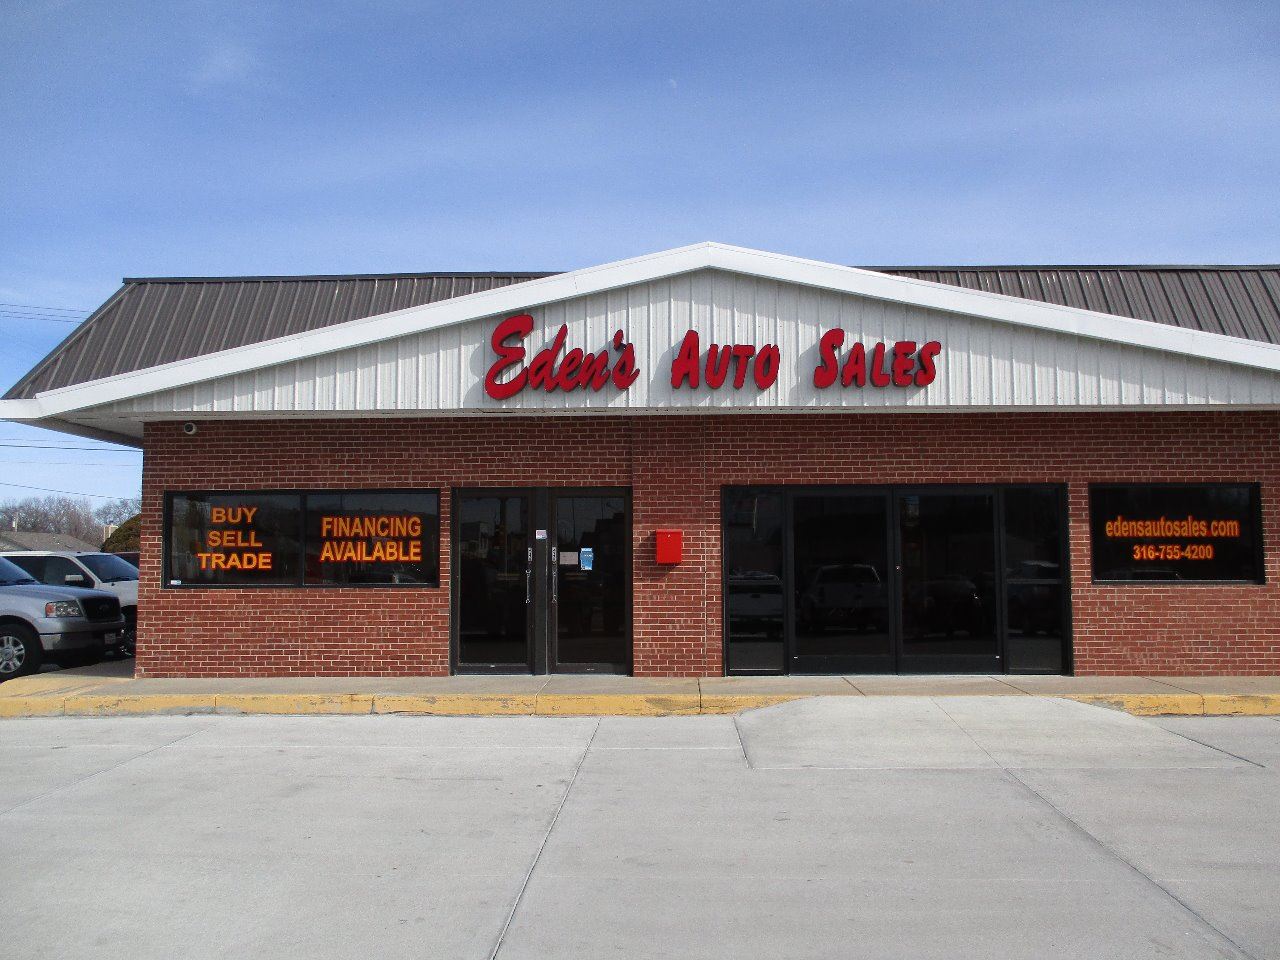 Eden's Auto Sales